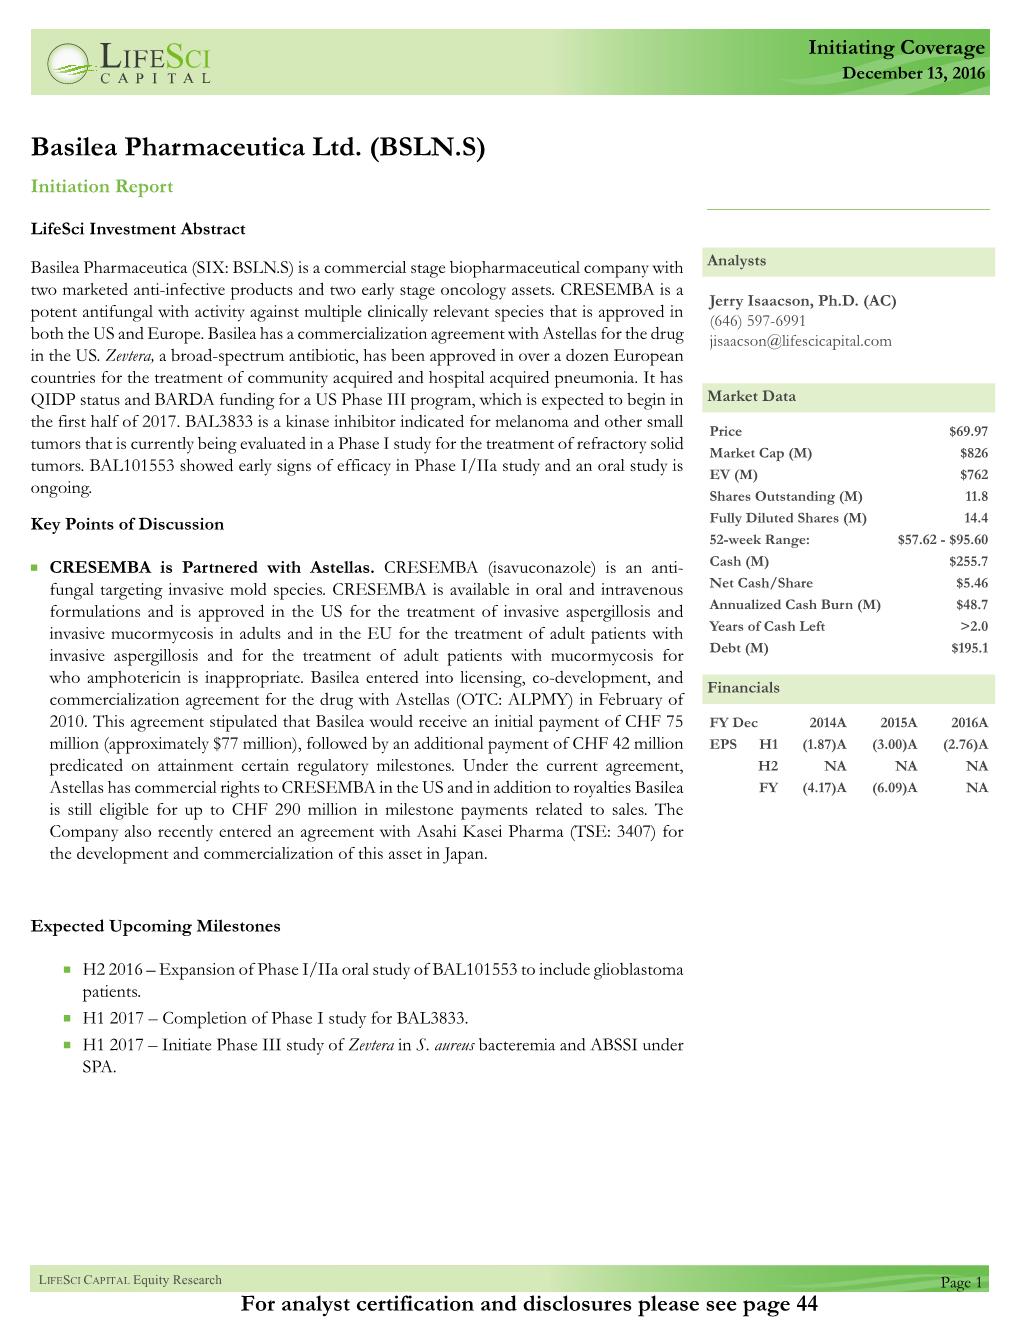 Basilea Pharmaceutica Ltd. (BSLN.S) Initiation Report